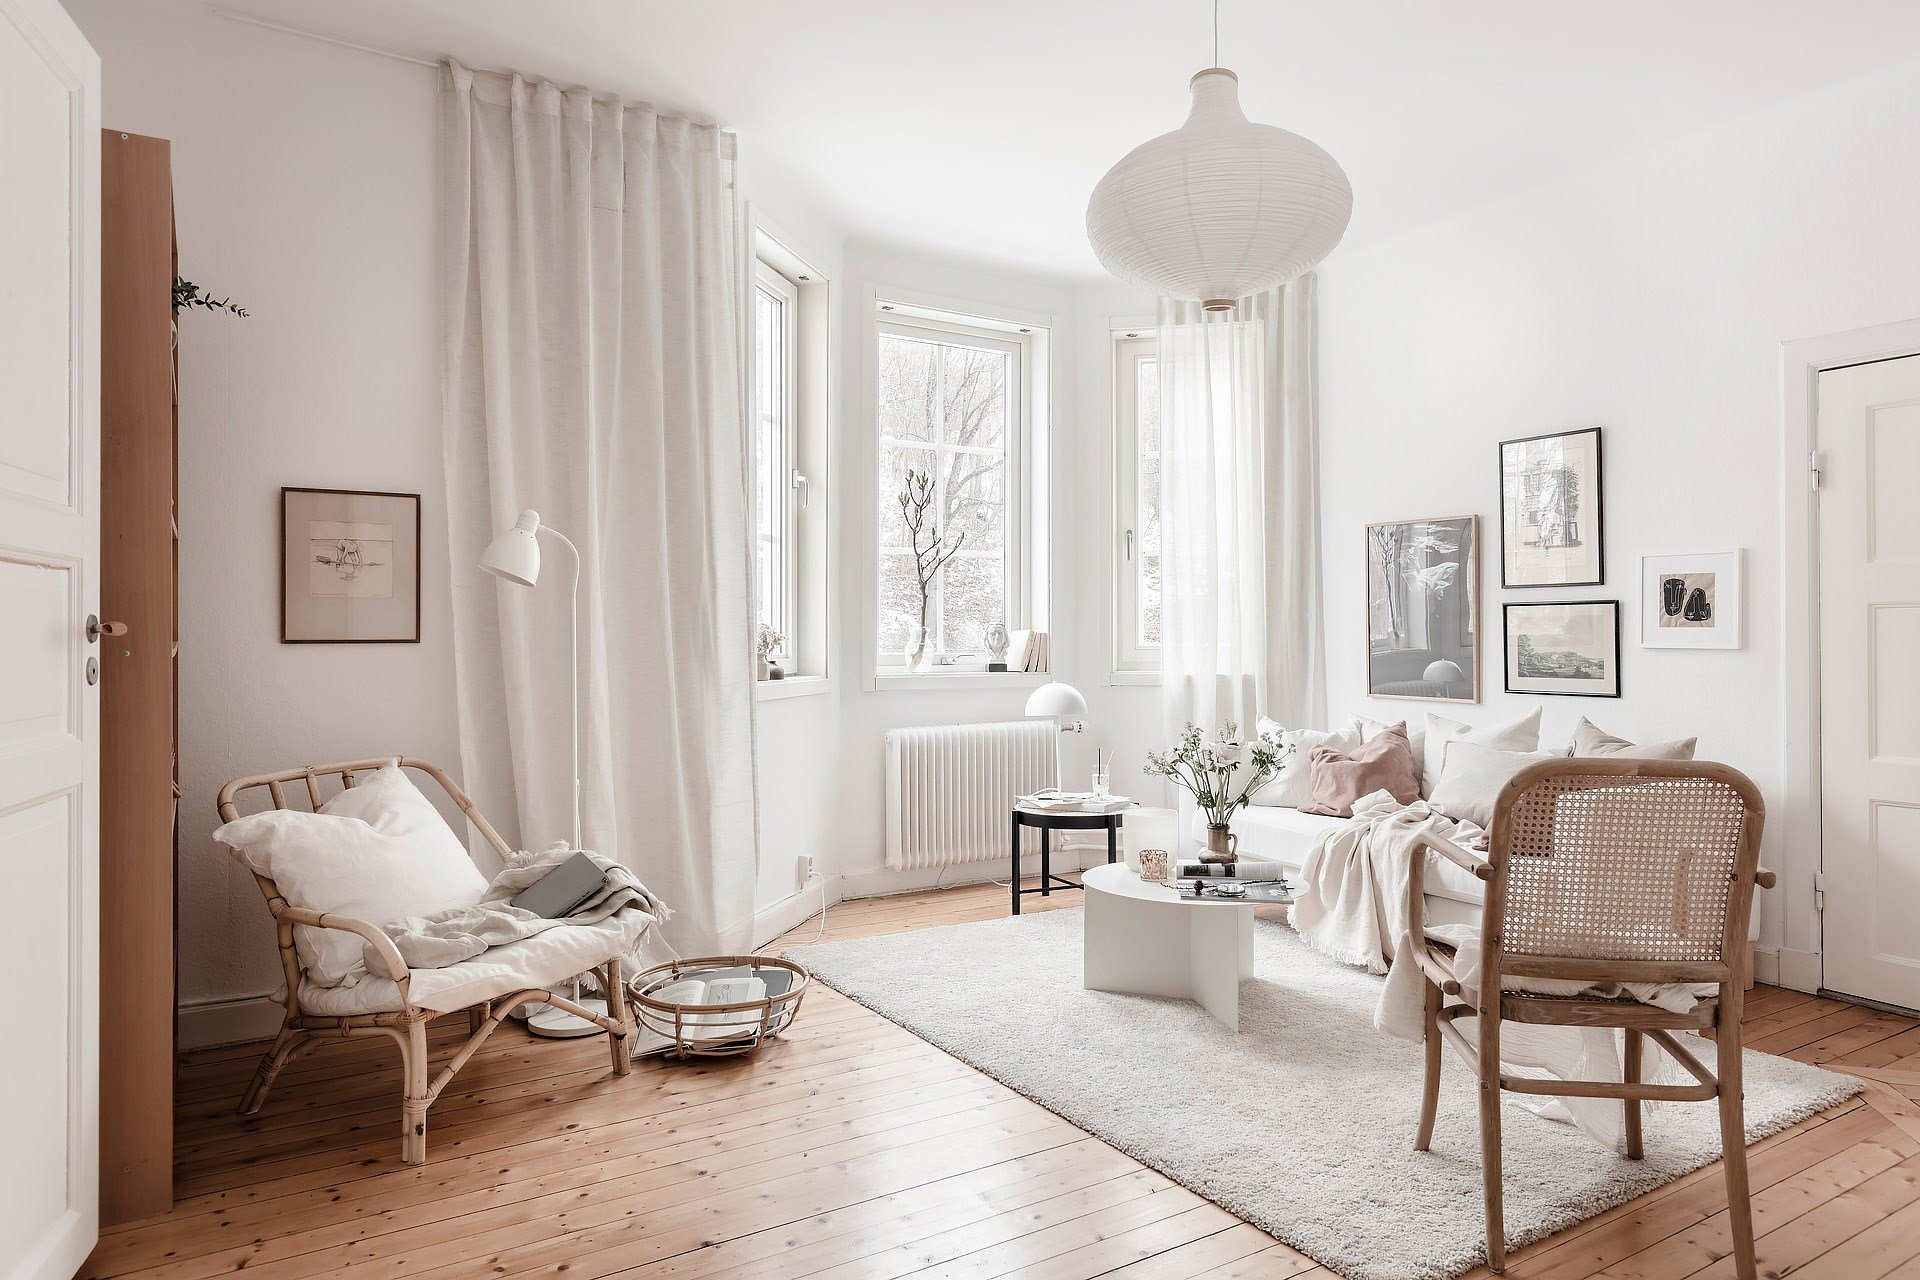 mini-piso-en-suecia-con-decoracion-moderna-nordica-salon-con-lampara-de-techo 174a5b31 1920x1280